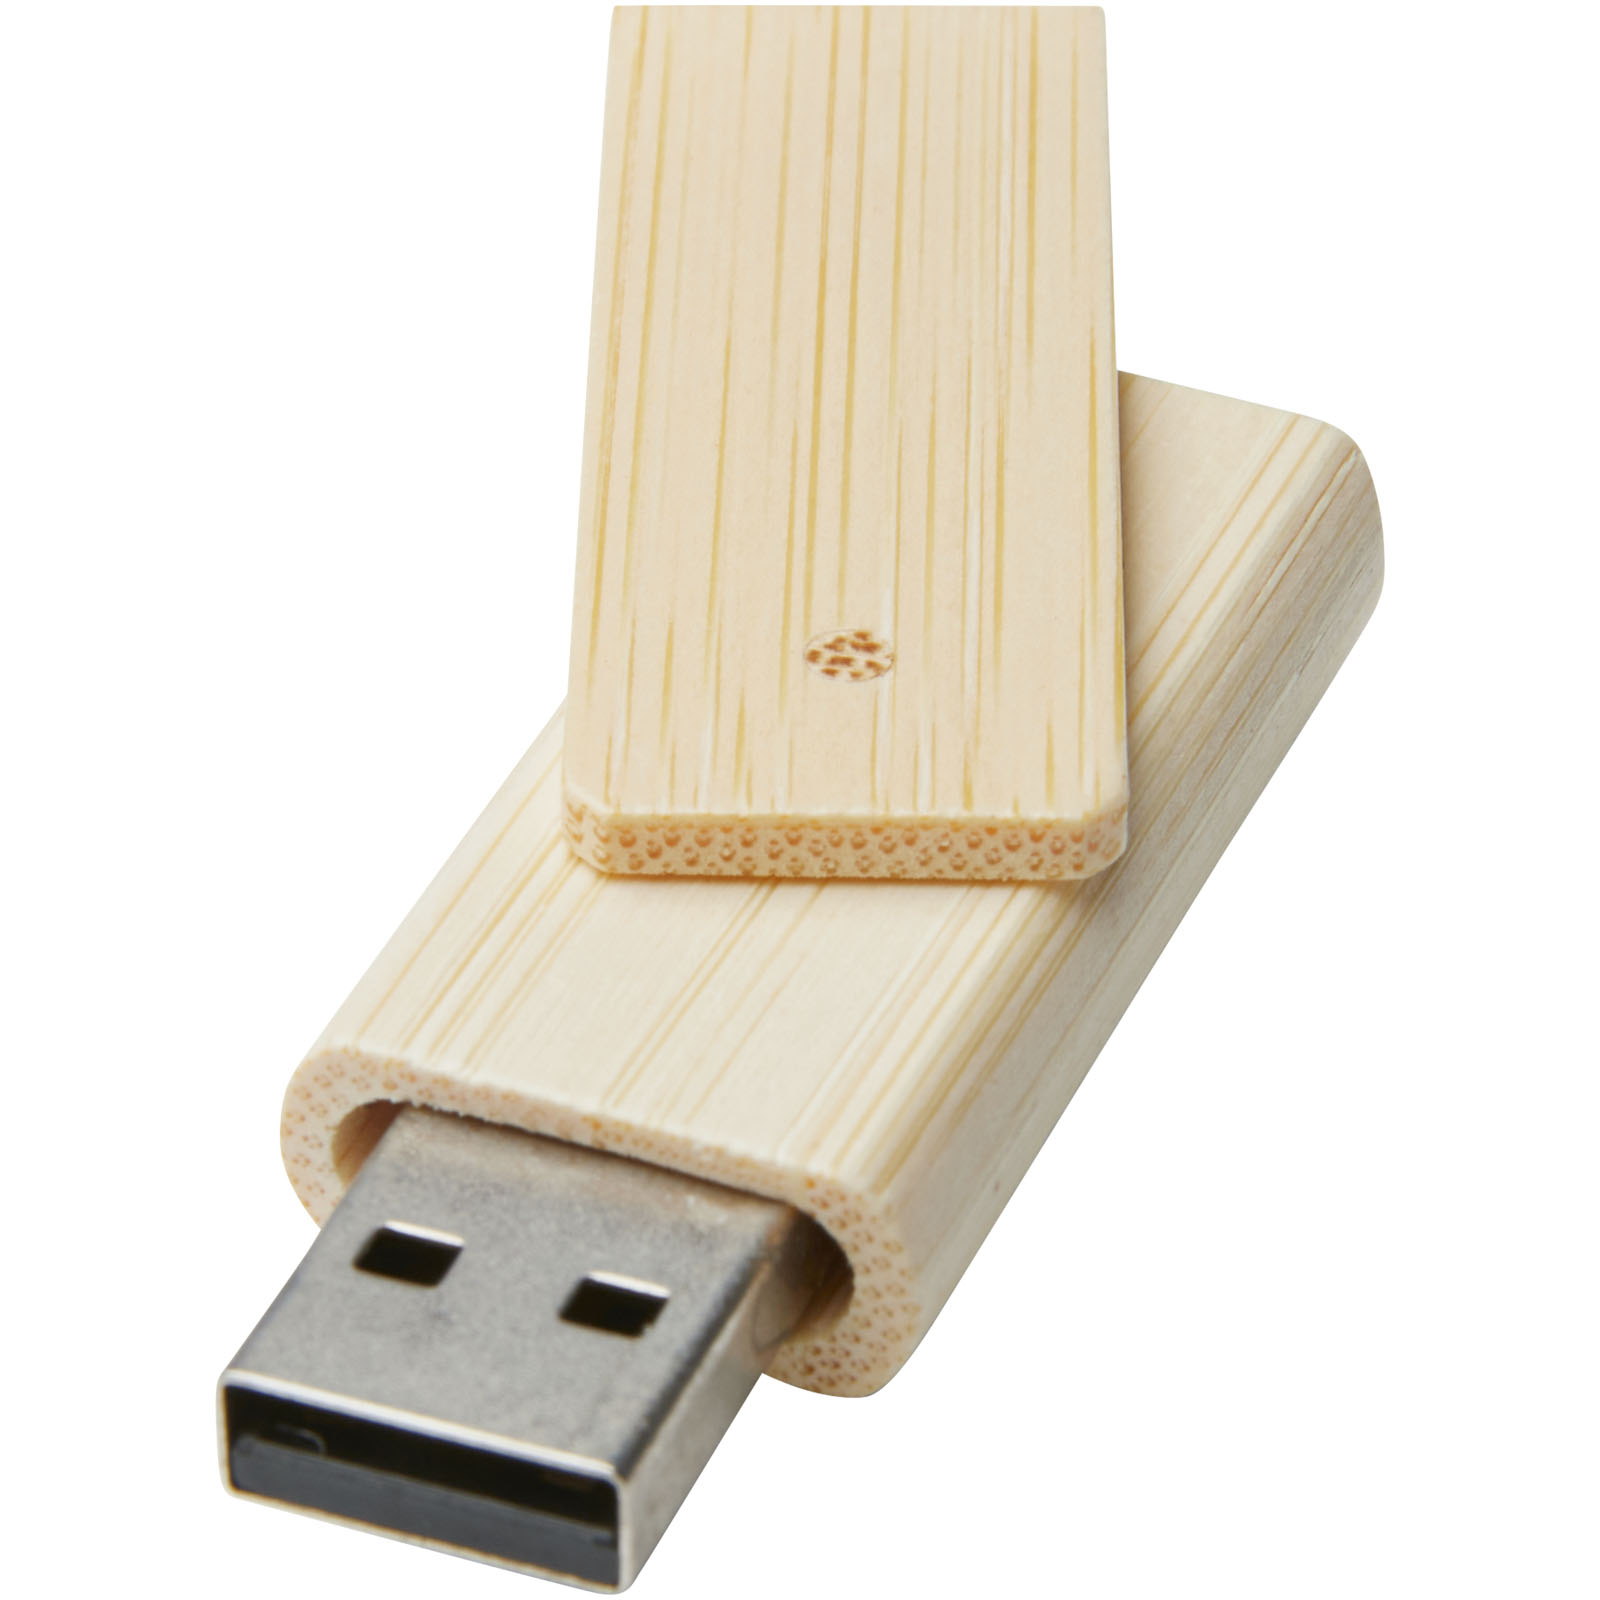 Clés USB - Clé USB Rotate 16 Go en bambou